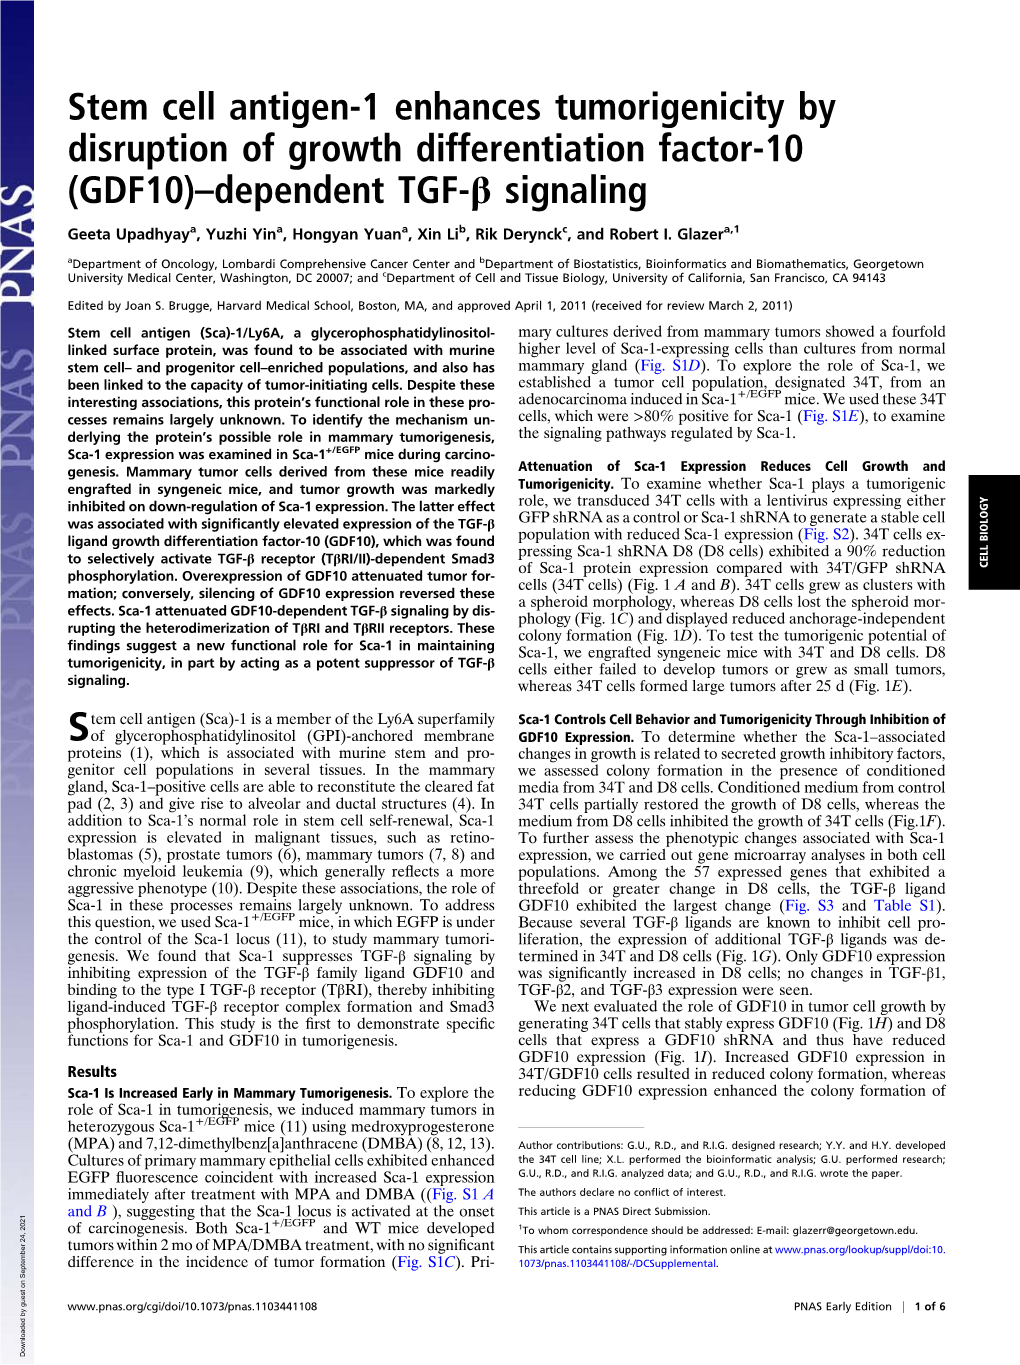 Stem Cell Antigen-1 Enhances Tumorigenicity by Disruption of Growth Differentiation Factor-10 (GDF10)–Dependent TGF-Β Signaling